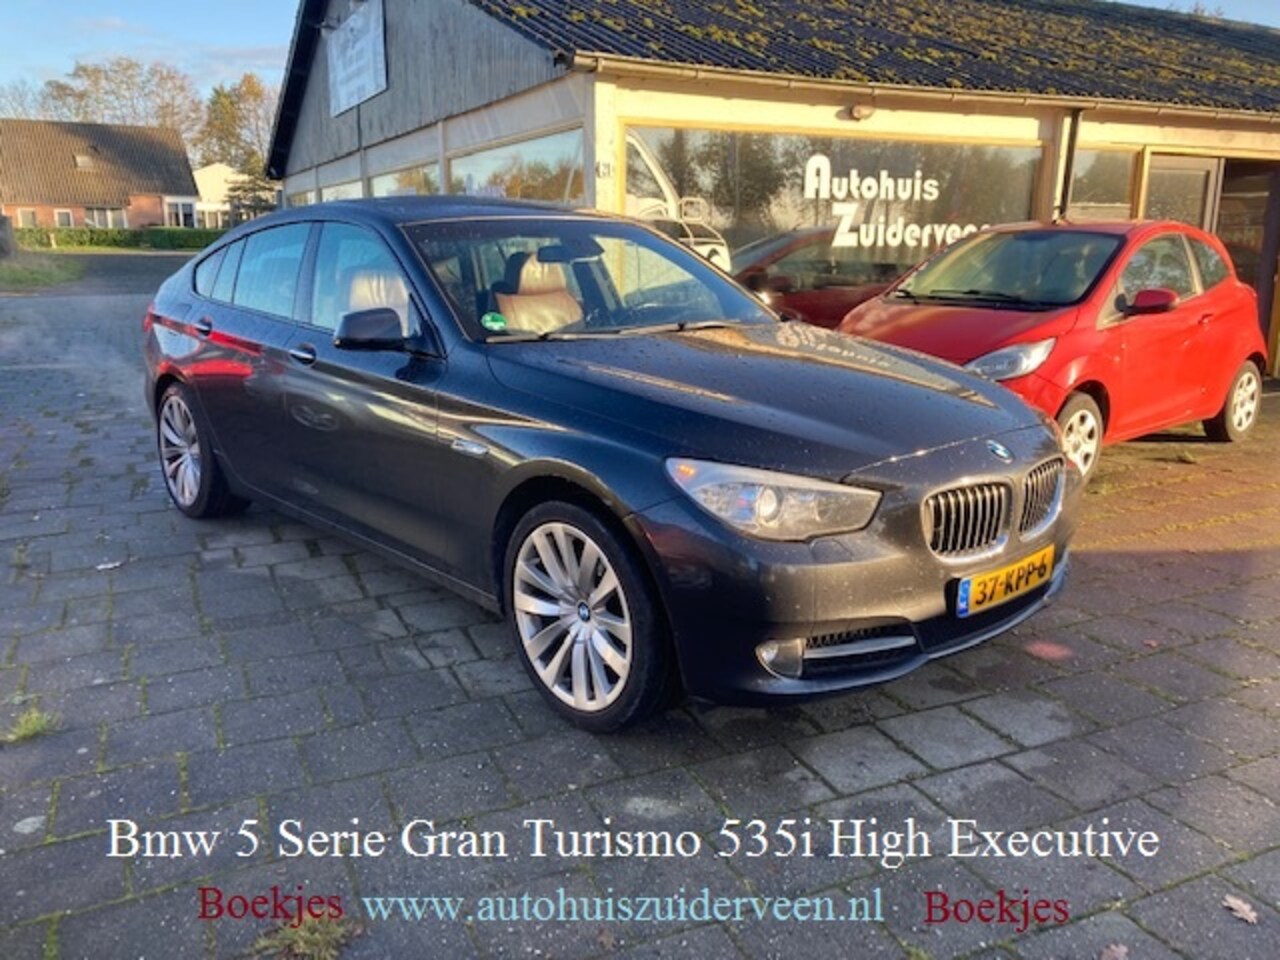 BMW 5-serie Gran Turismo - 535i 306 PK Aut High Executive 2010 - AutoWereld.nl